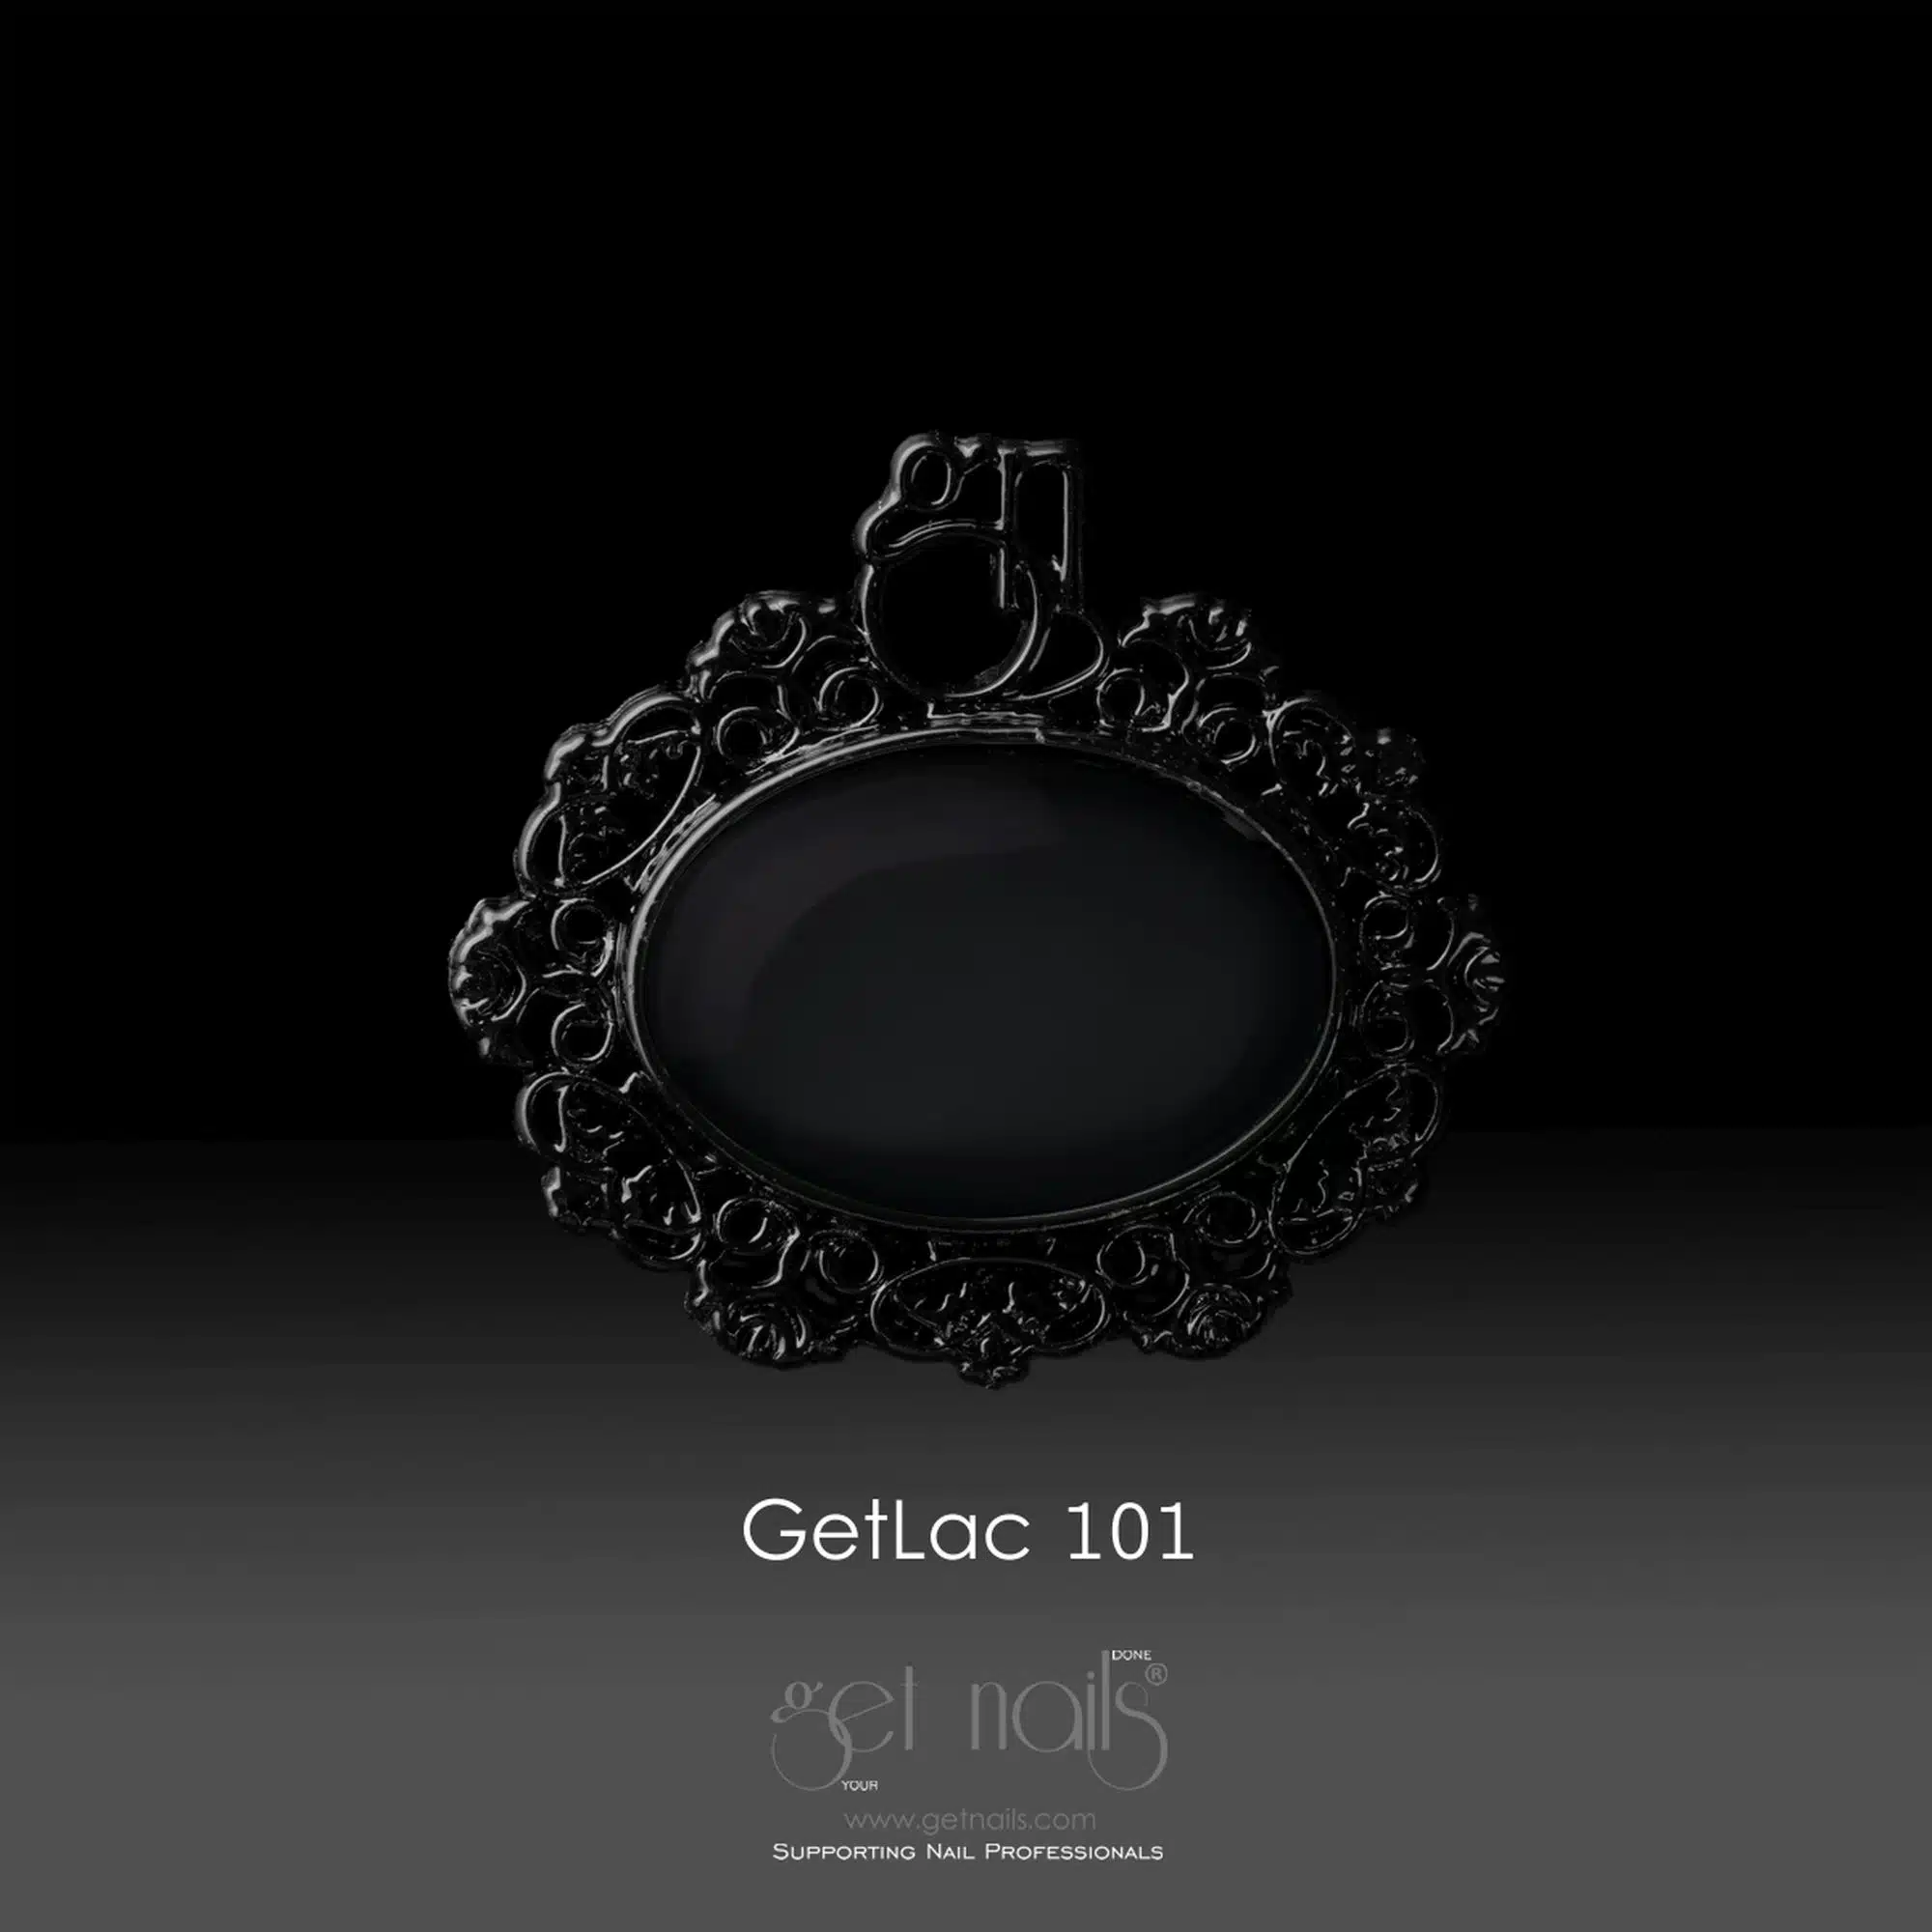 Get Nails Austria - GetLac 101 Черный 15г